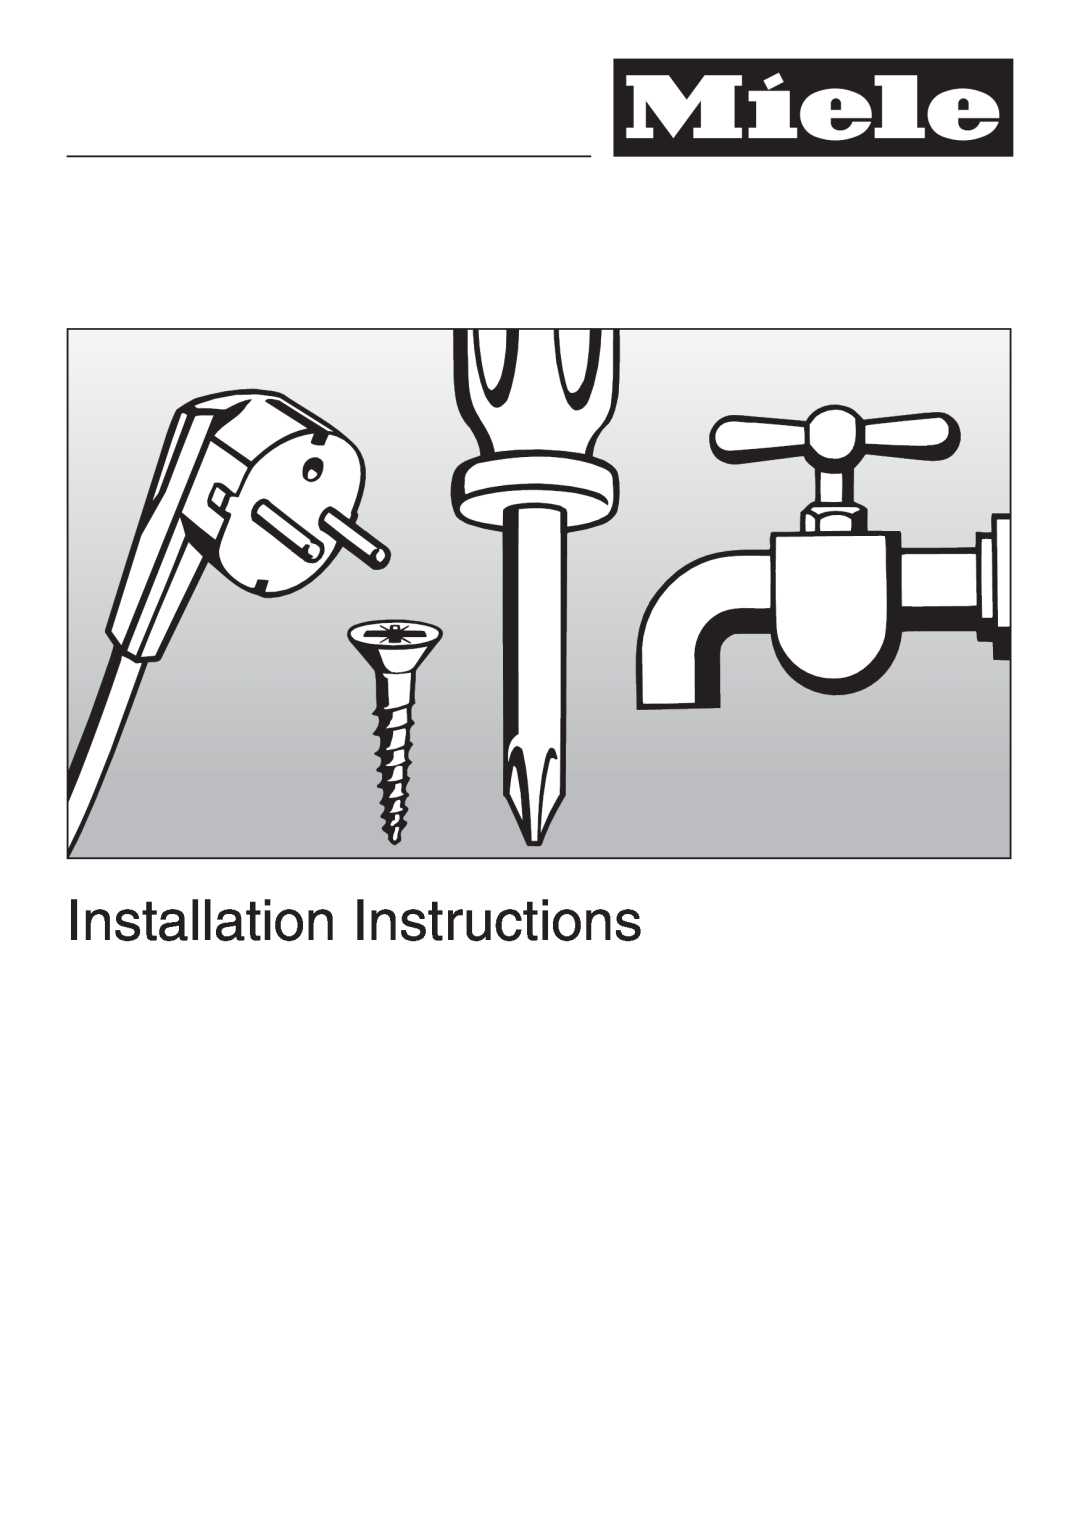 Miele DA 279-4 installation instructions Installation Instructions 